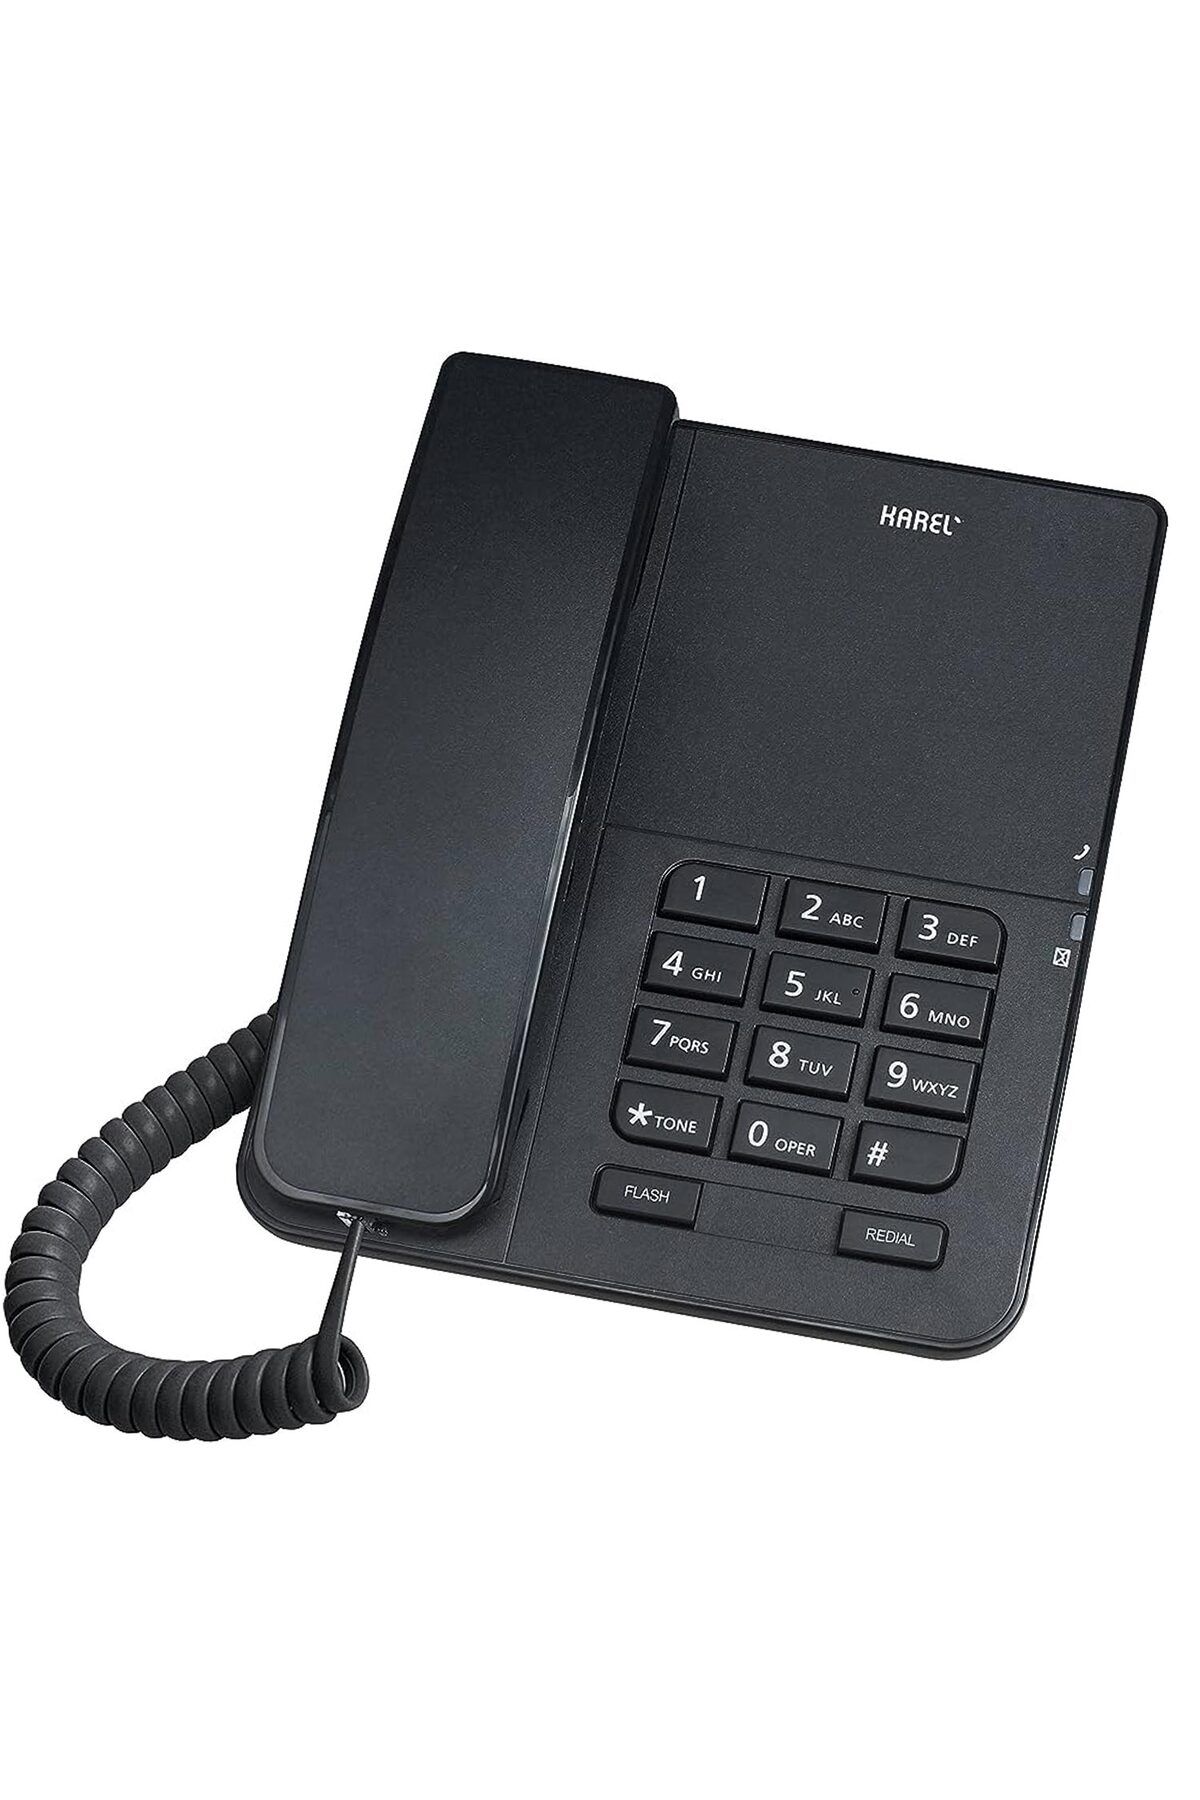 KAREL MASA TELEFONU SİYAH KAREL TM-140